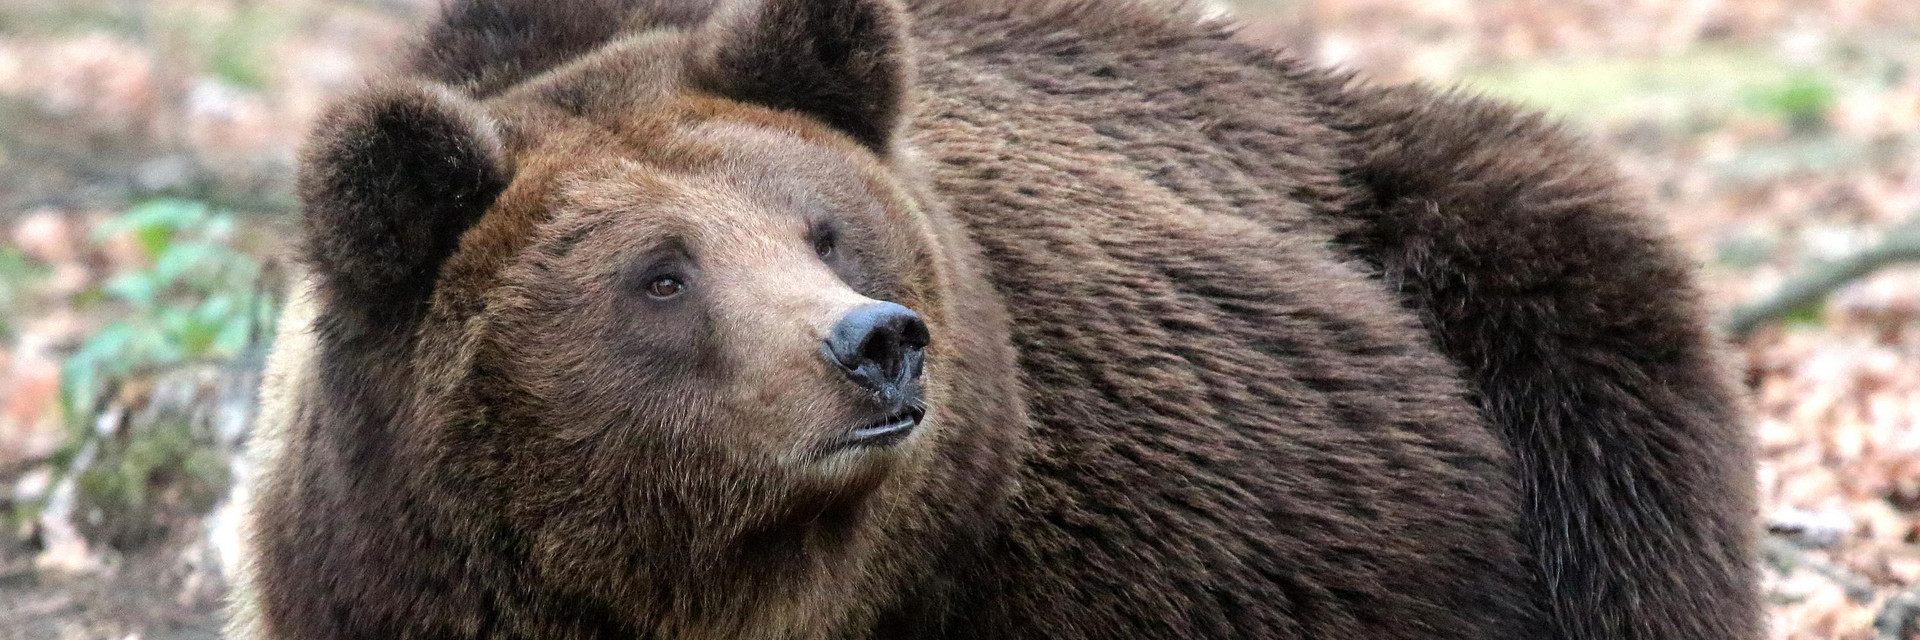 Brown Bear: Torpor or Hibernation? - FOUR PAWS in US - Global Animal  Protection Organization